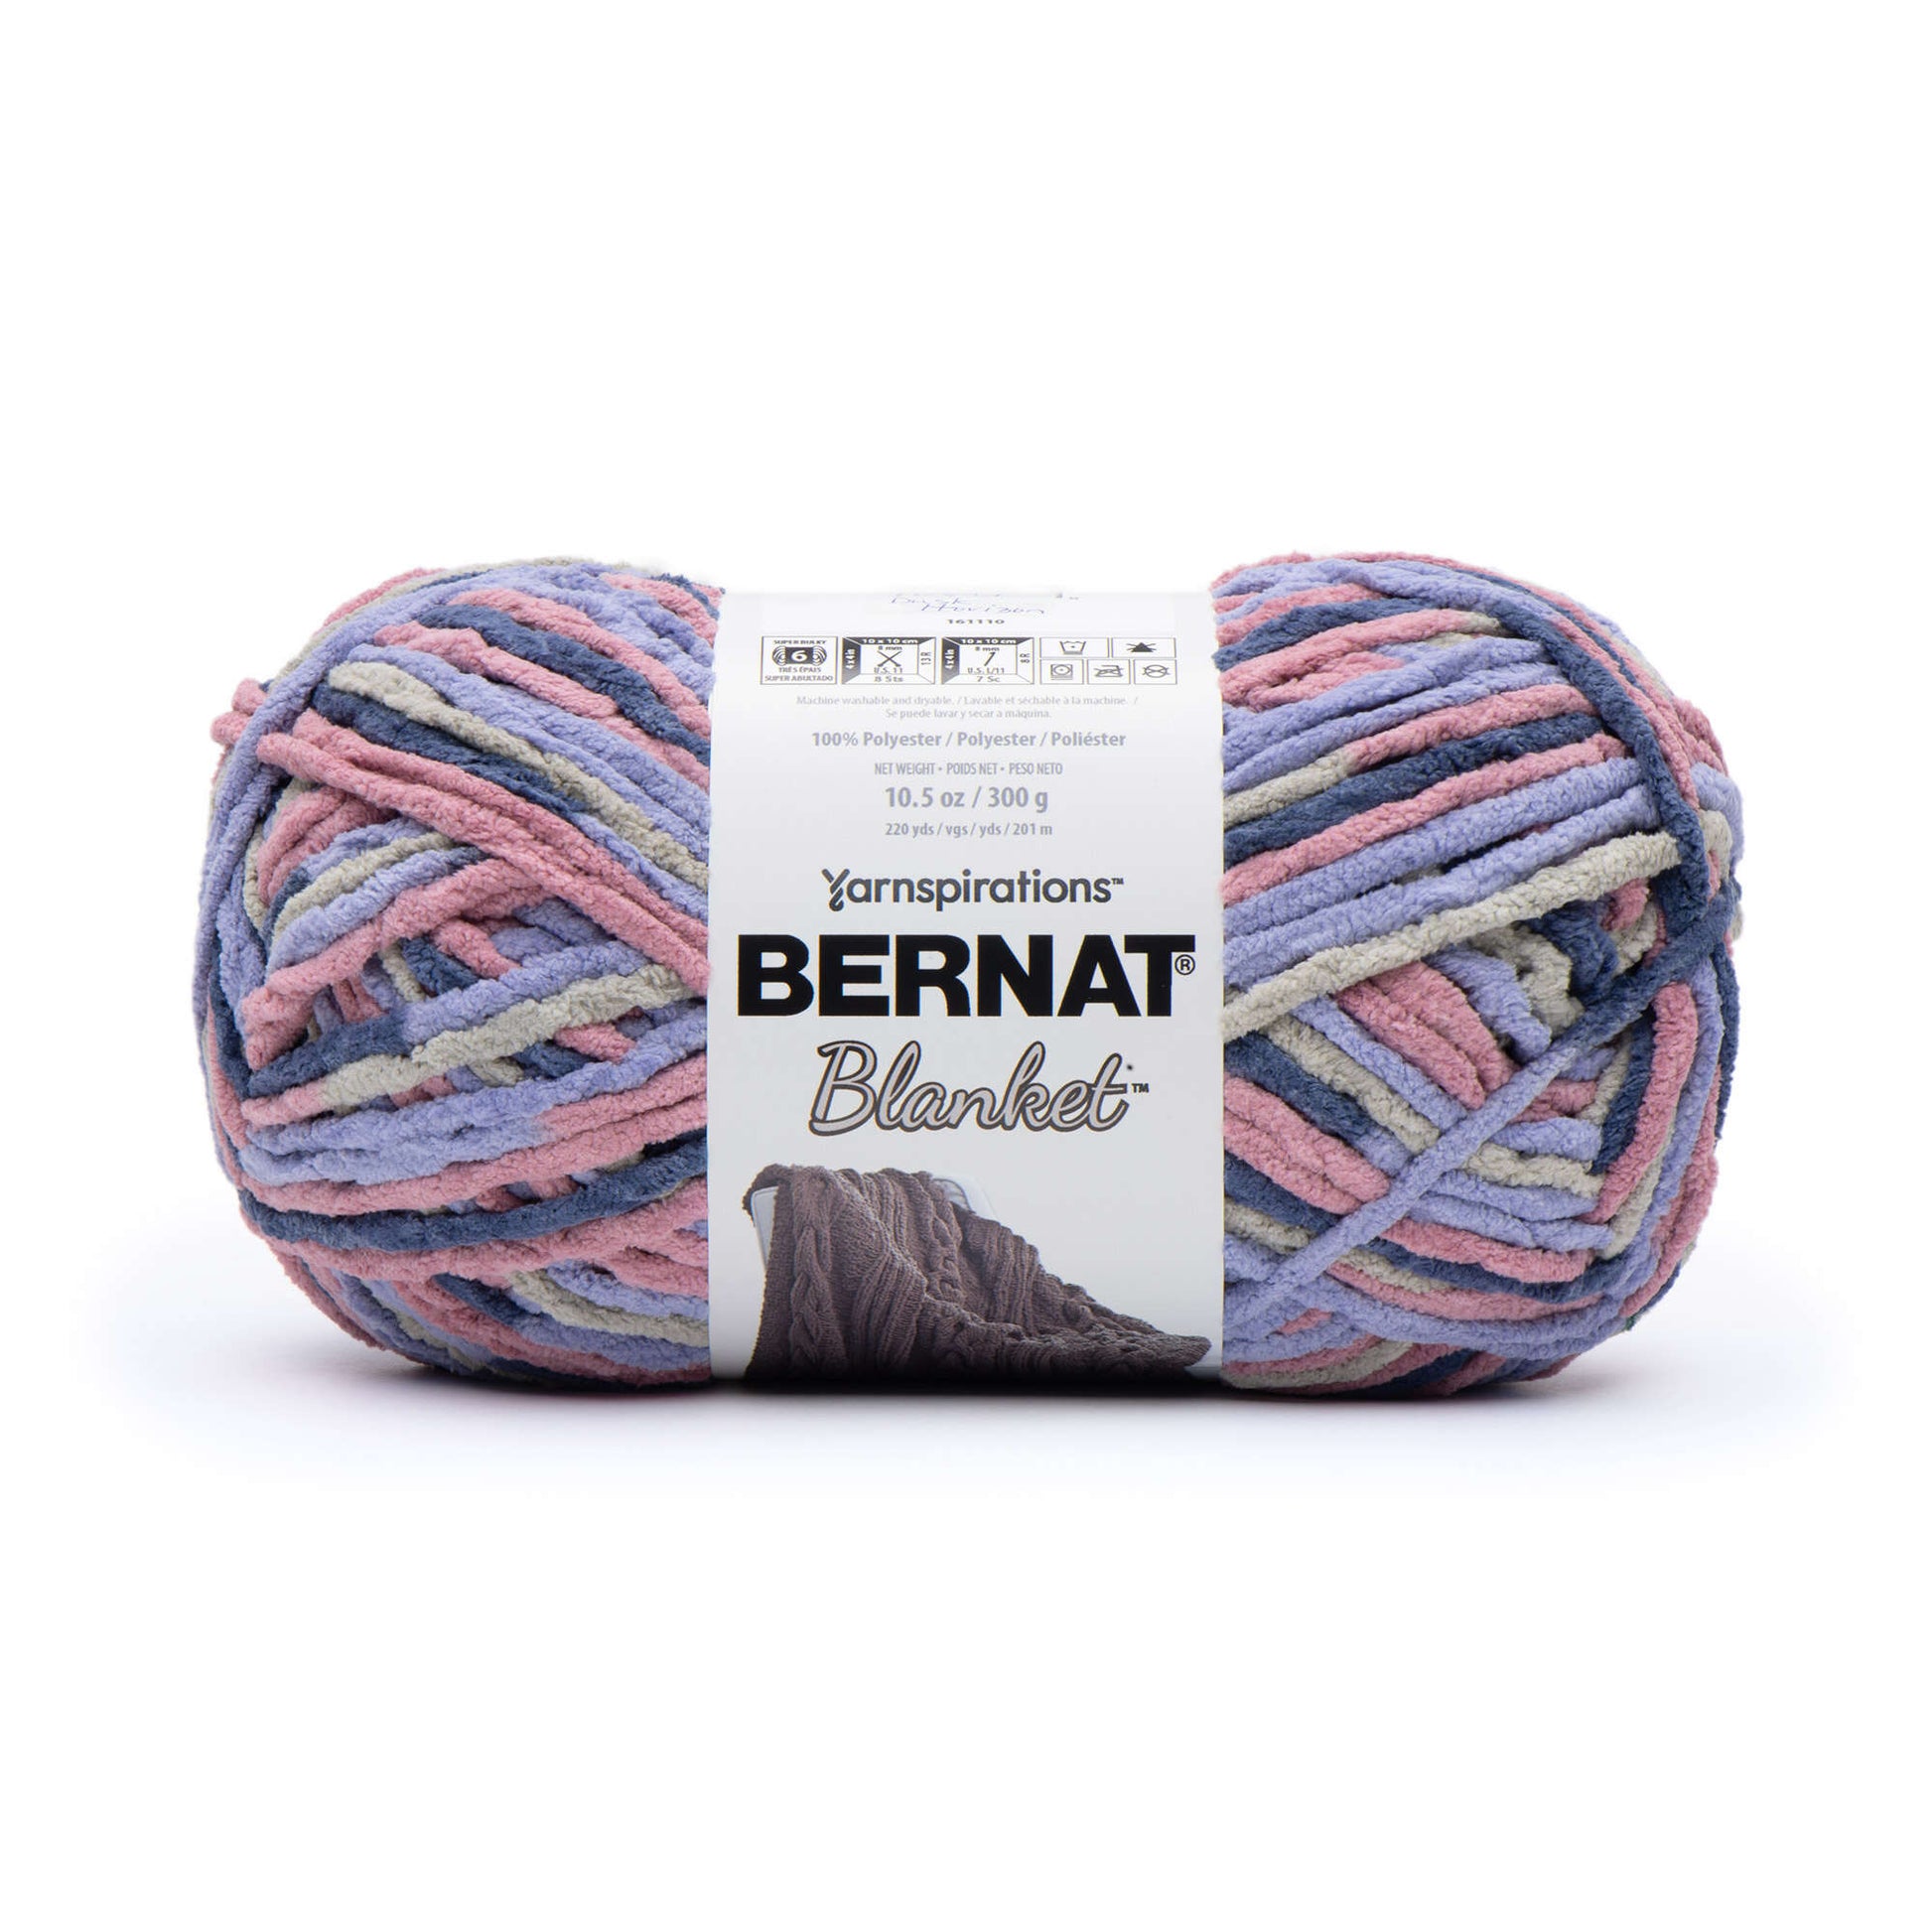 Bernat Blanket Yarn (300g/10.5oz) Dusk Horizon